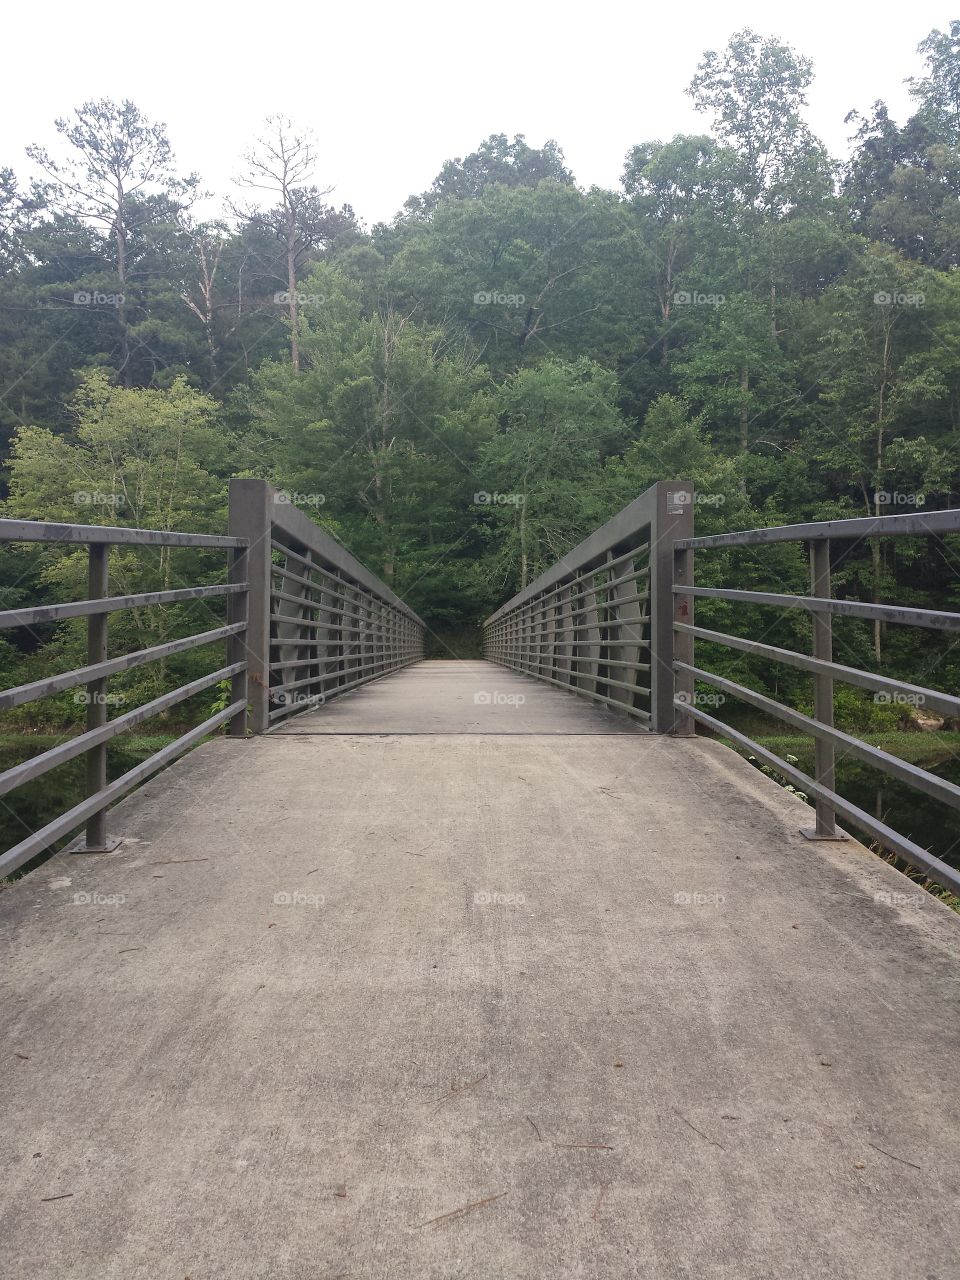 The Bridge. This is a walking bridge located near Gallant, AL